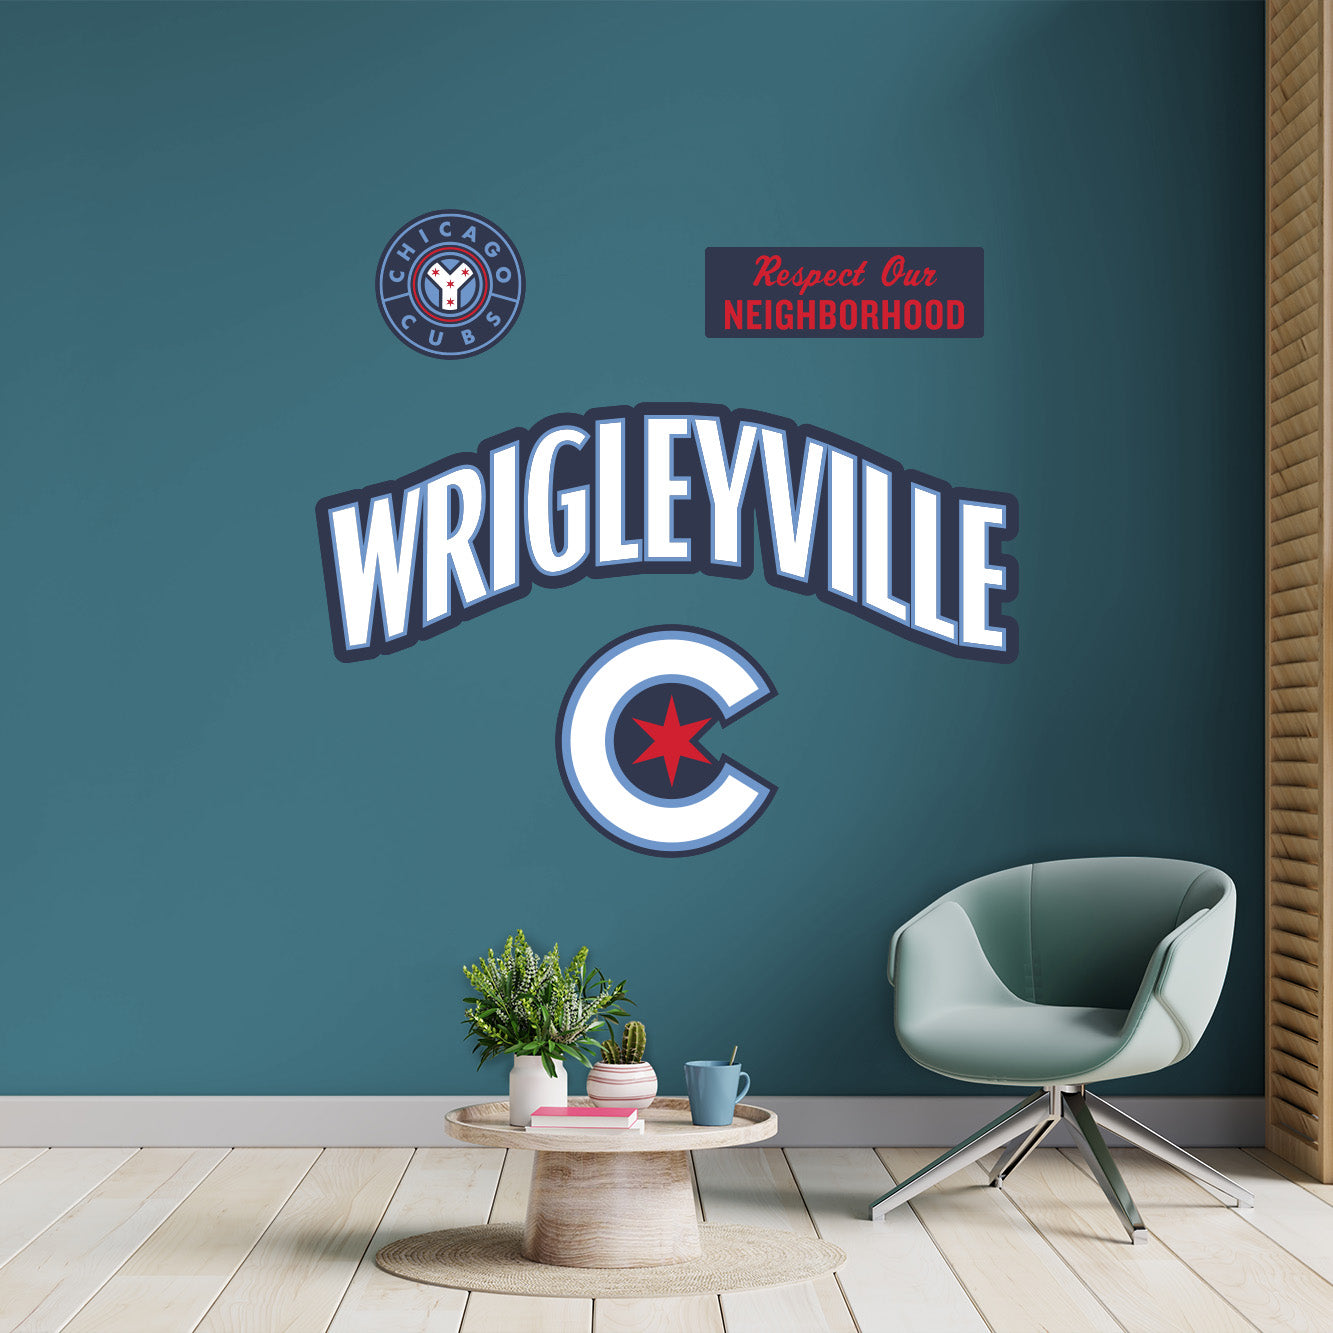 Chicago Cubs: 2023 Wrigleyville City Connect Logo - Officially